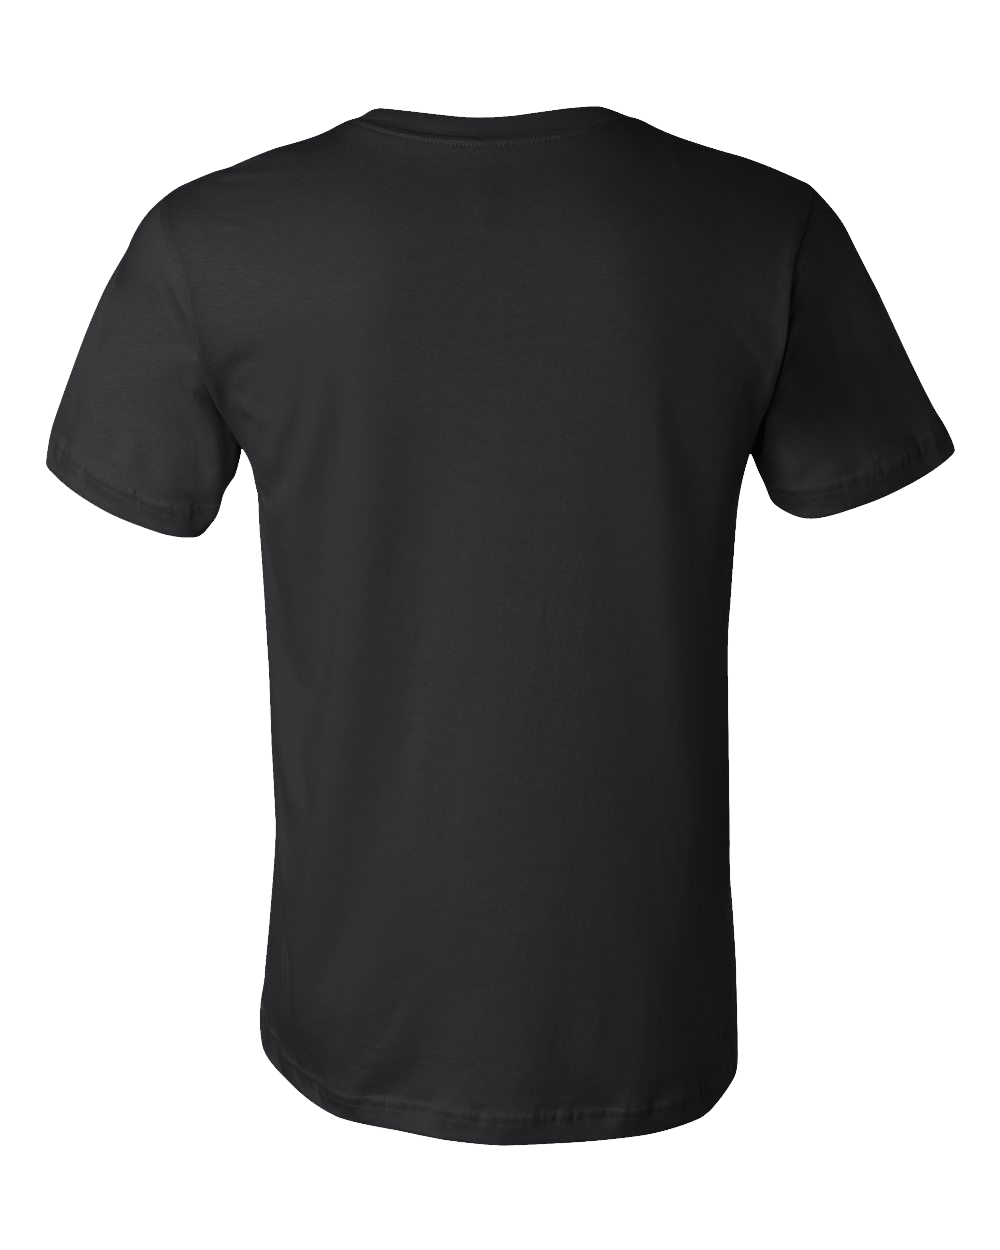 Standard Black Lemoyne, PA | Retro, Vintage Style Pennsylvania Pride  T-shirt